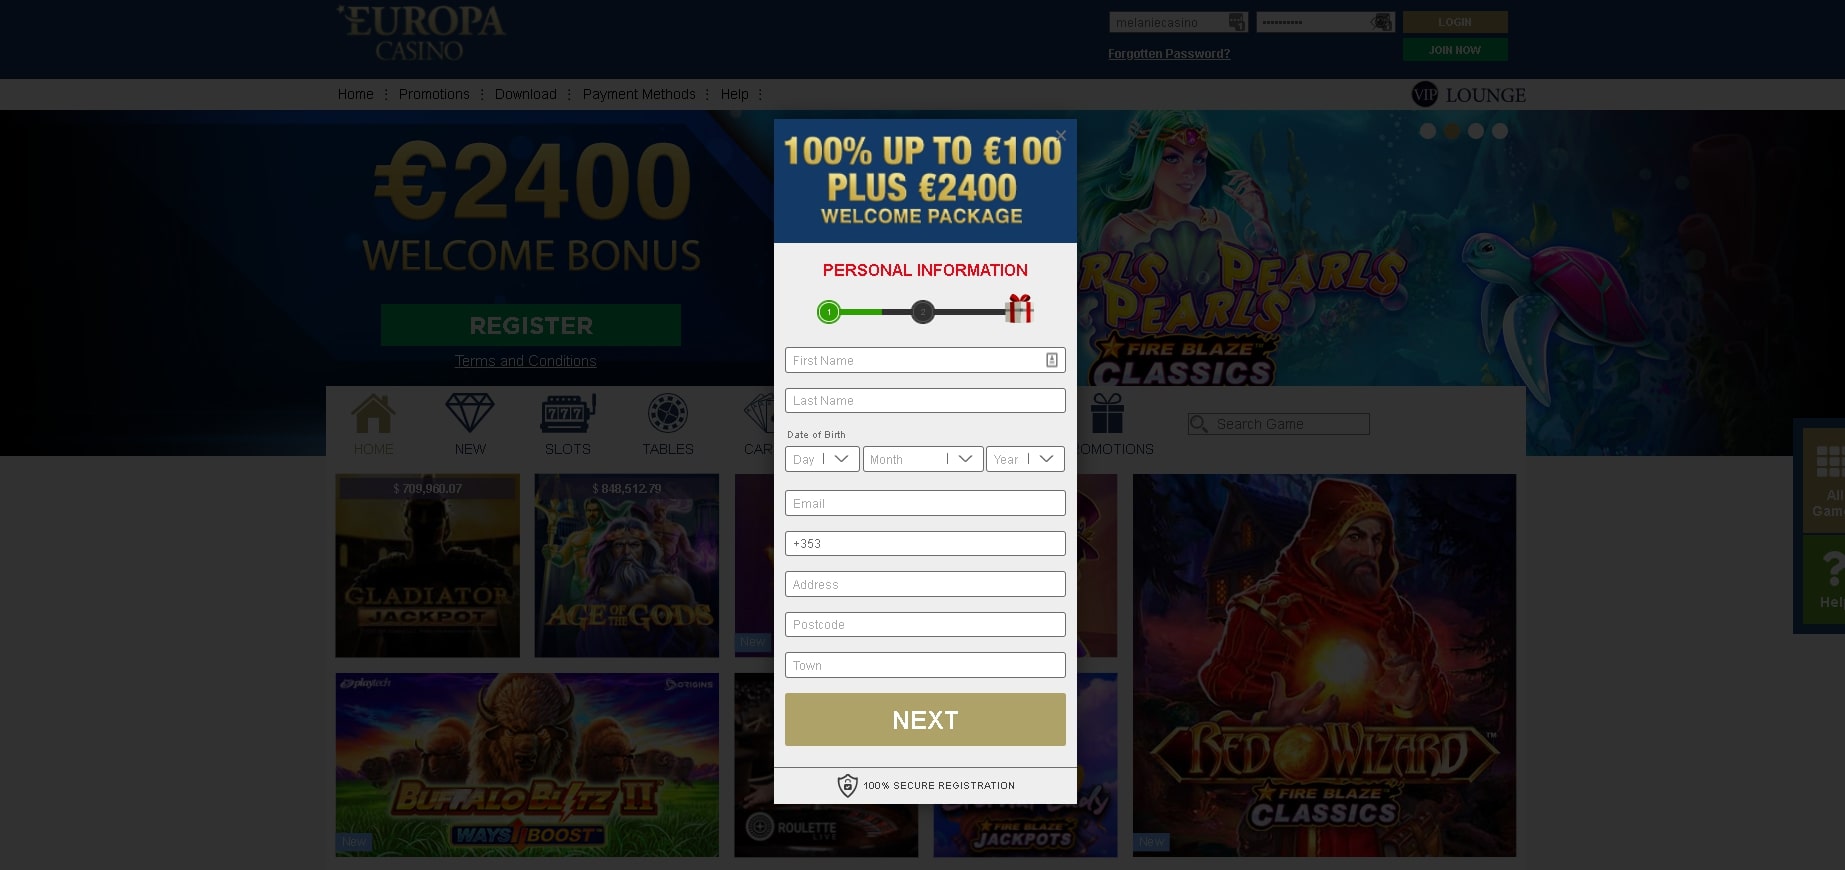 online casino europa auszahlung dauer